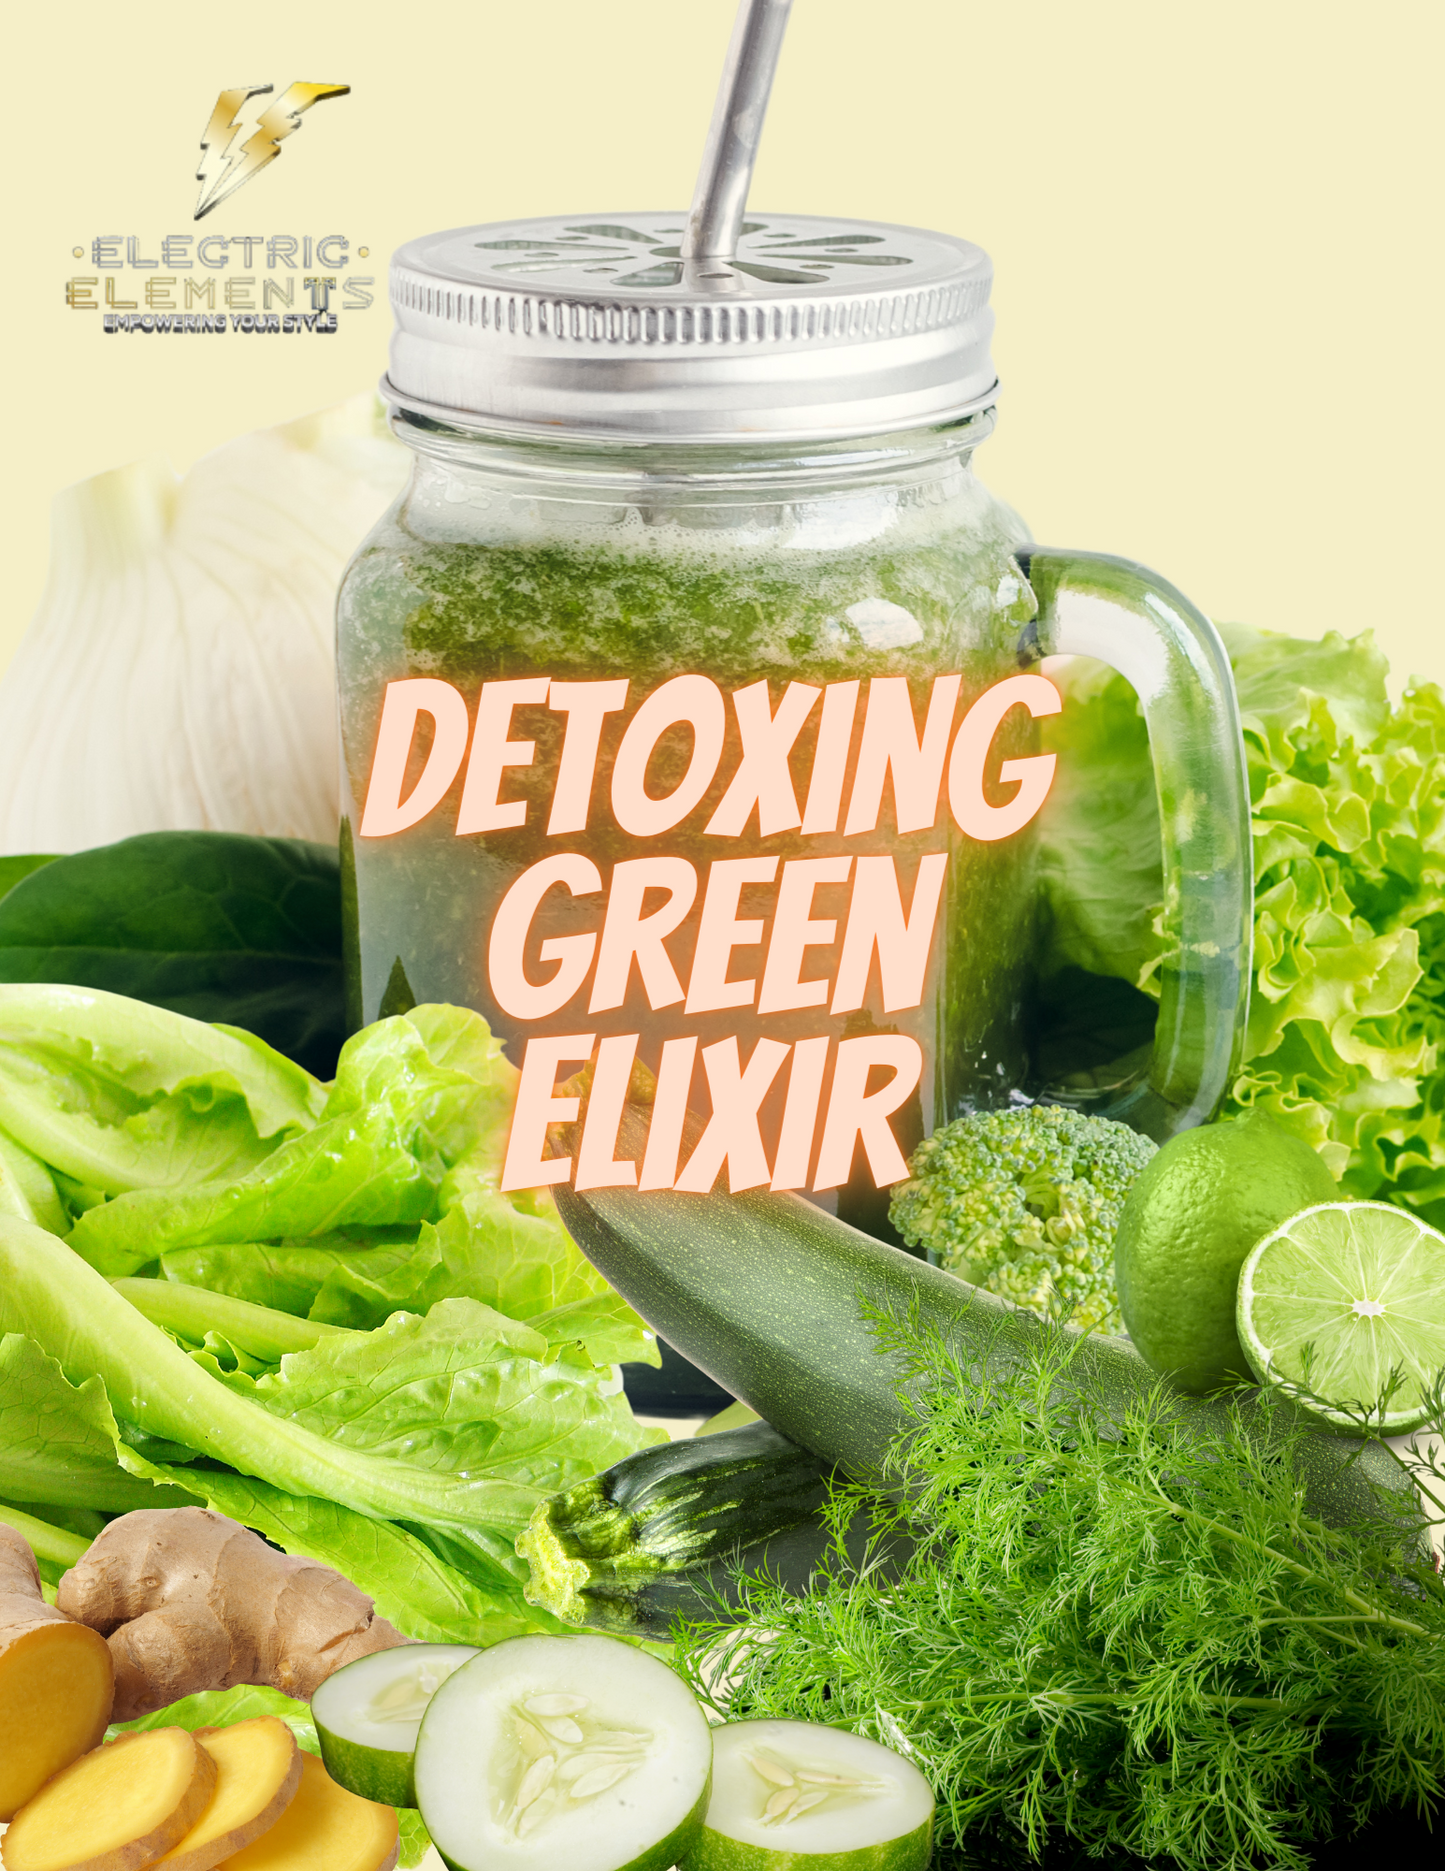 Alkaline-Electric Green Juice Recipes - FREE